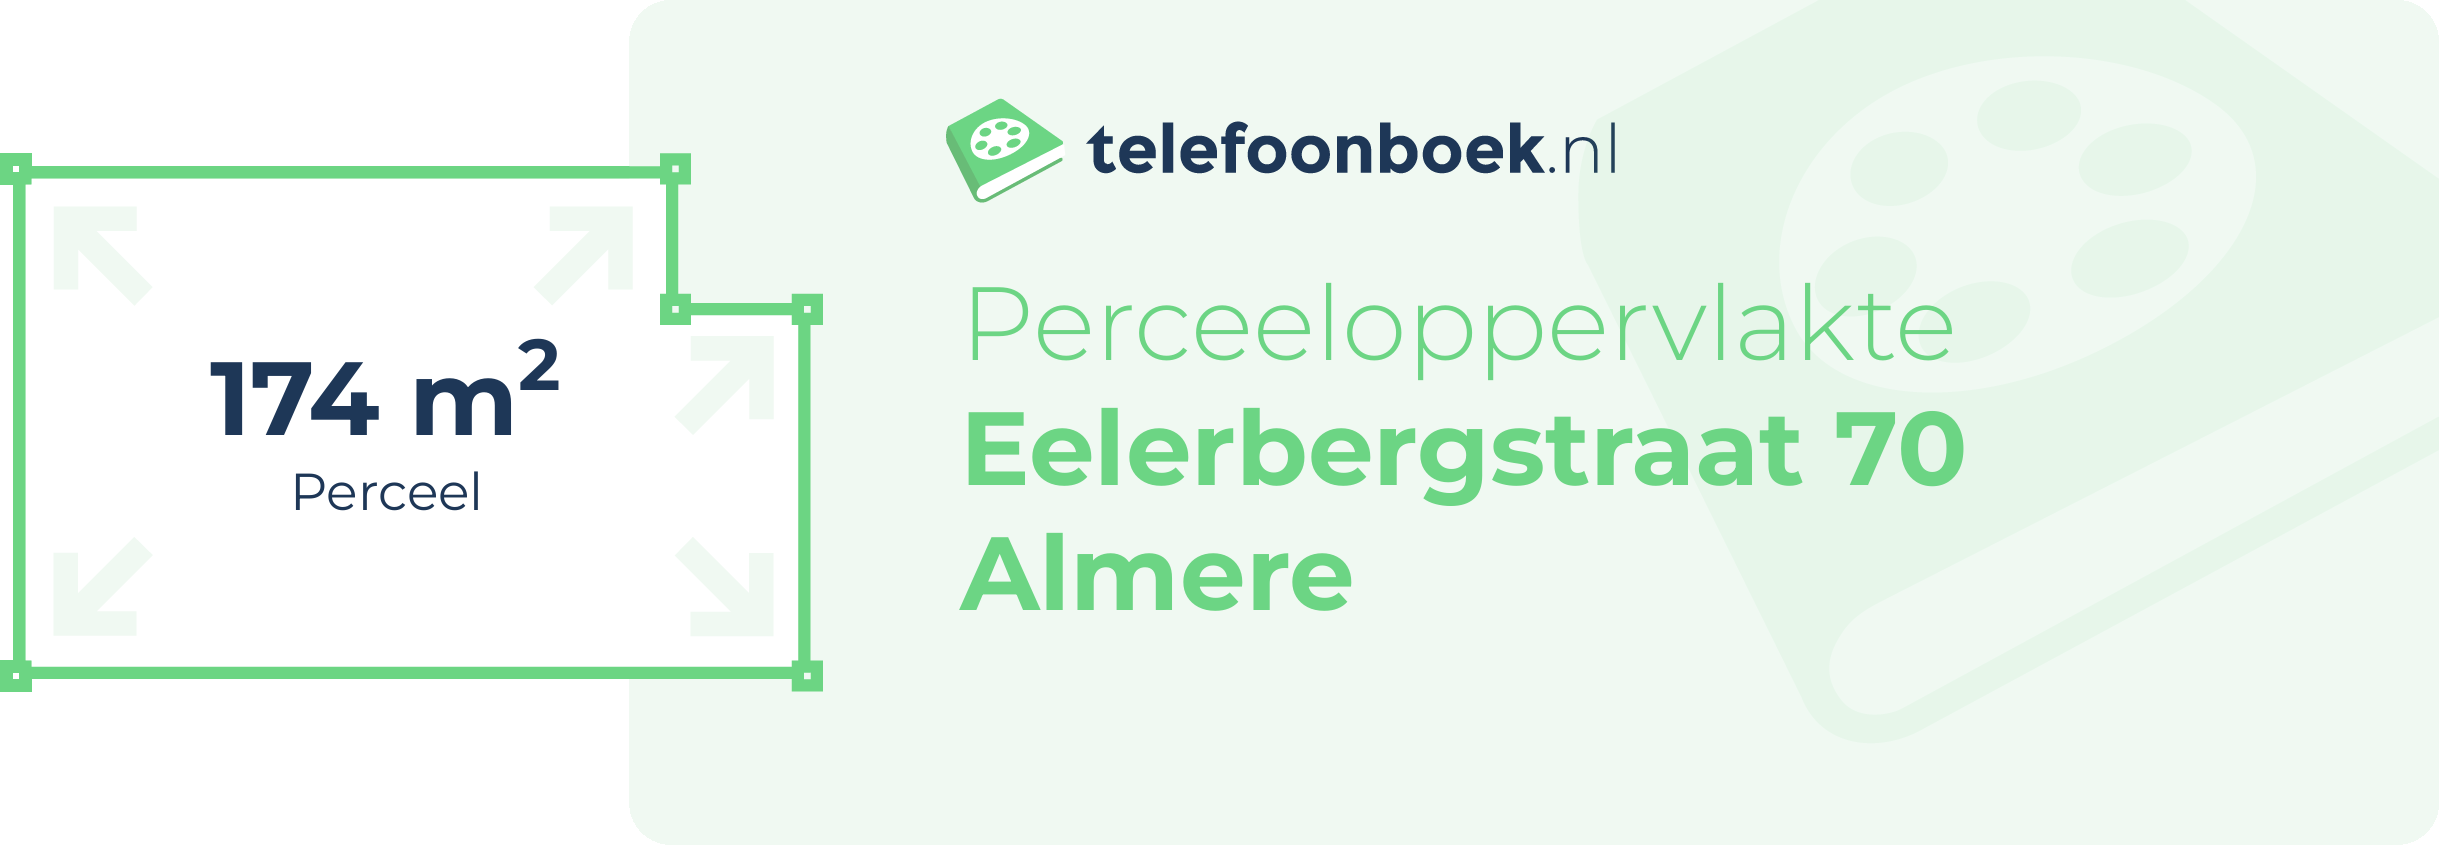 Perceeloppervlakte Eelerbergstraat 70 Almere